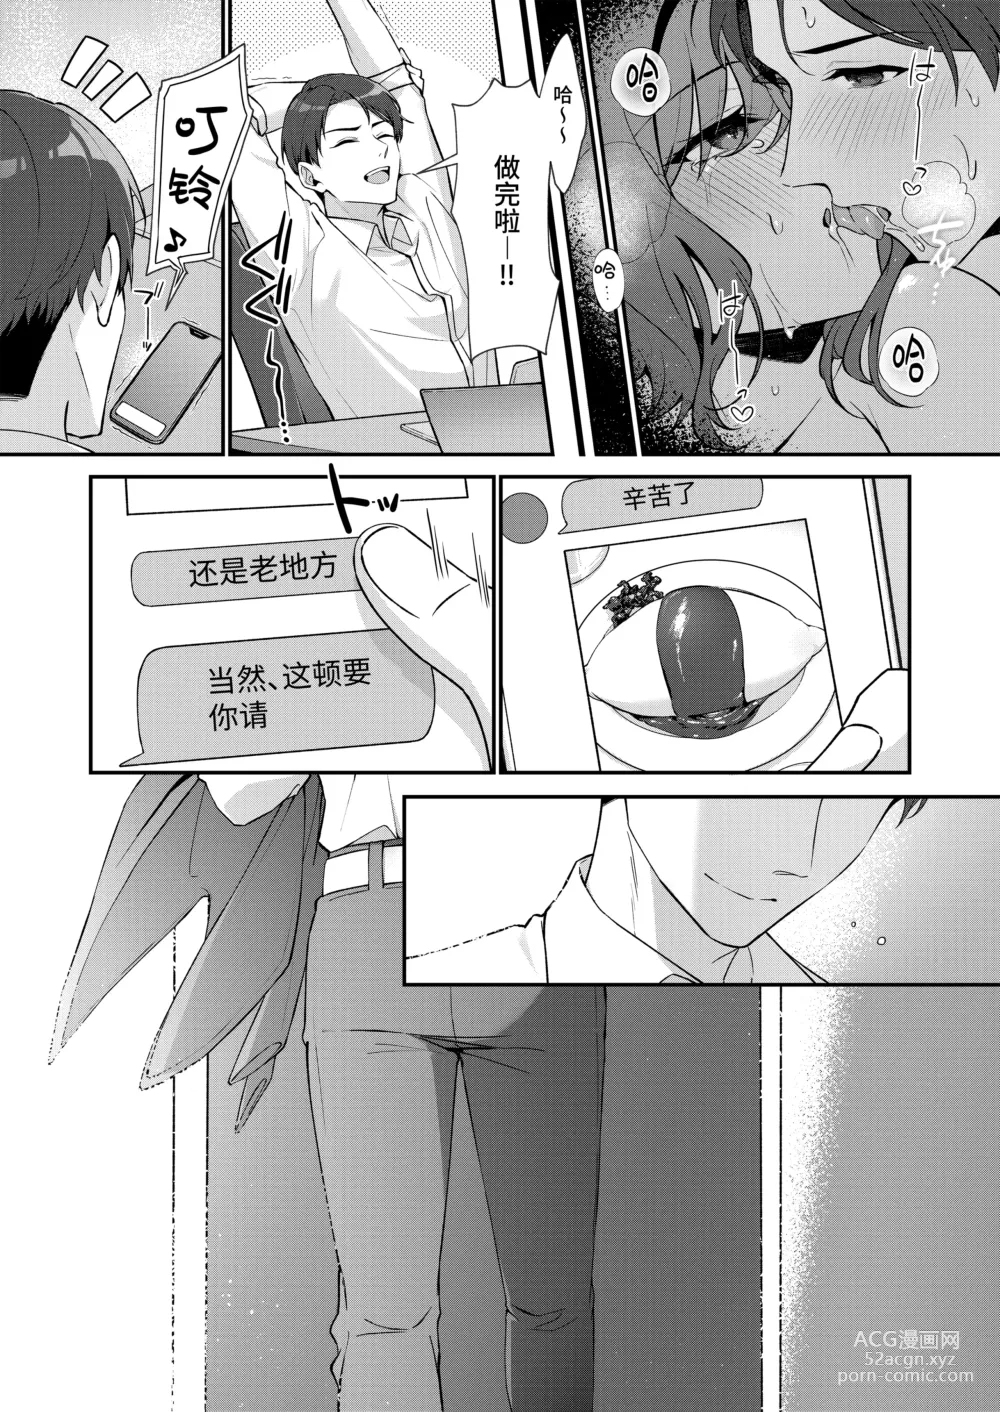 Page 27 of doujinshi 毕竟这是不可抗力的原因